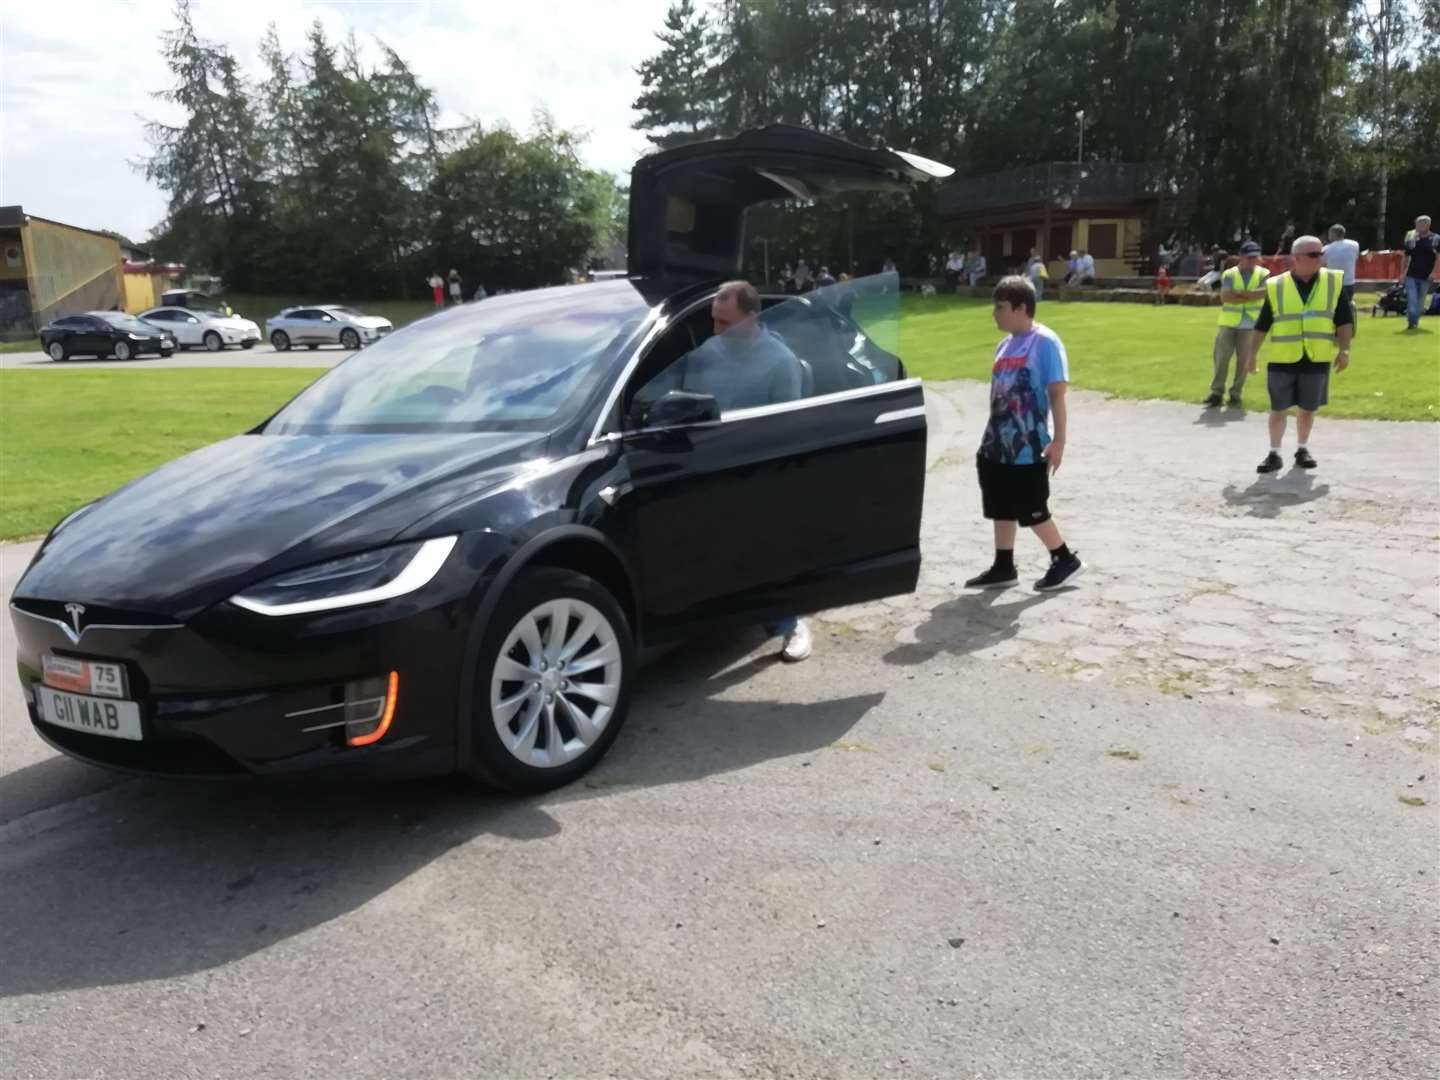 A hi-tech Tesla Model X welcomes passengers through unique gull-wing rear doors